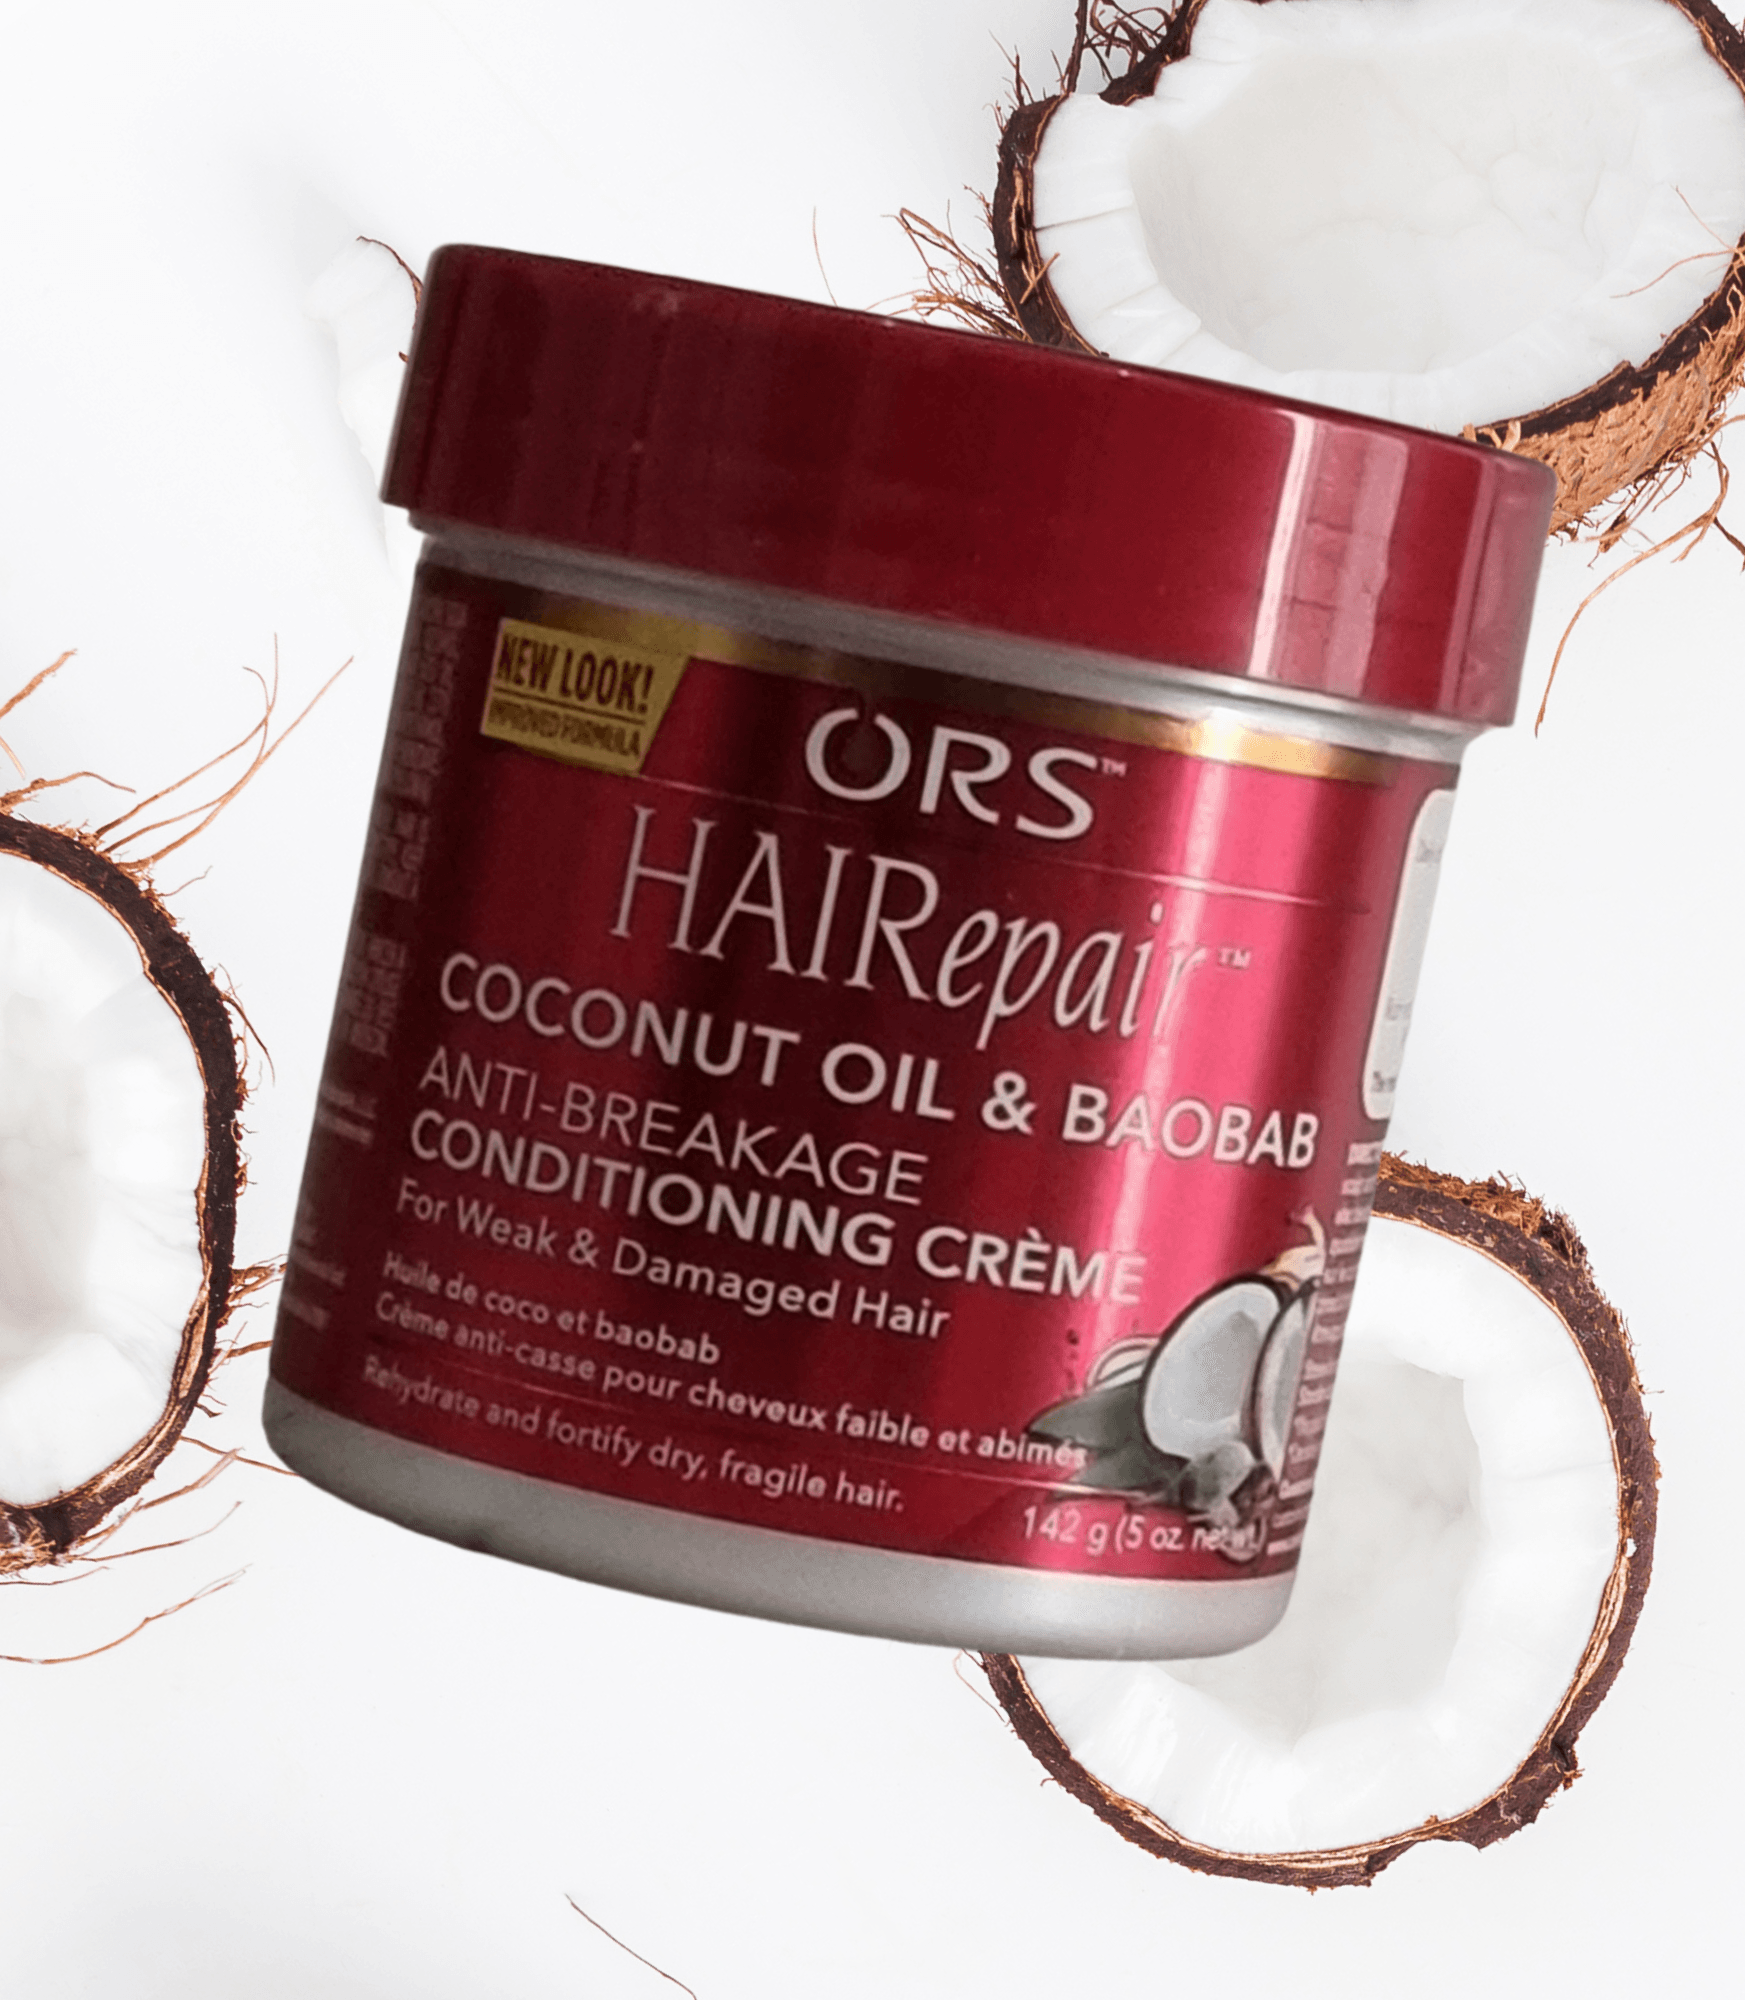 ORS Hairepair Coconut Oil And Baobab Anti Breakage Creme - LocsNco